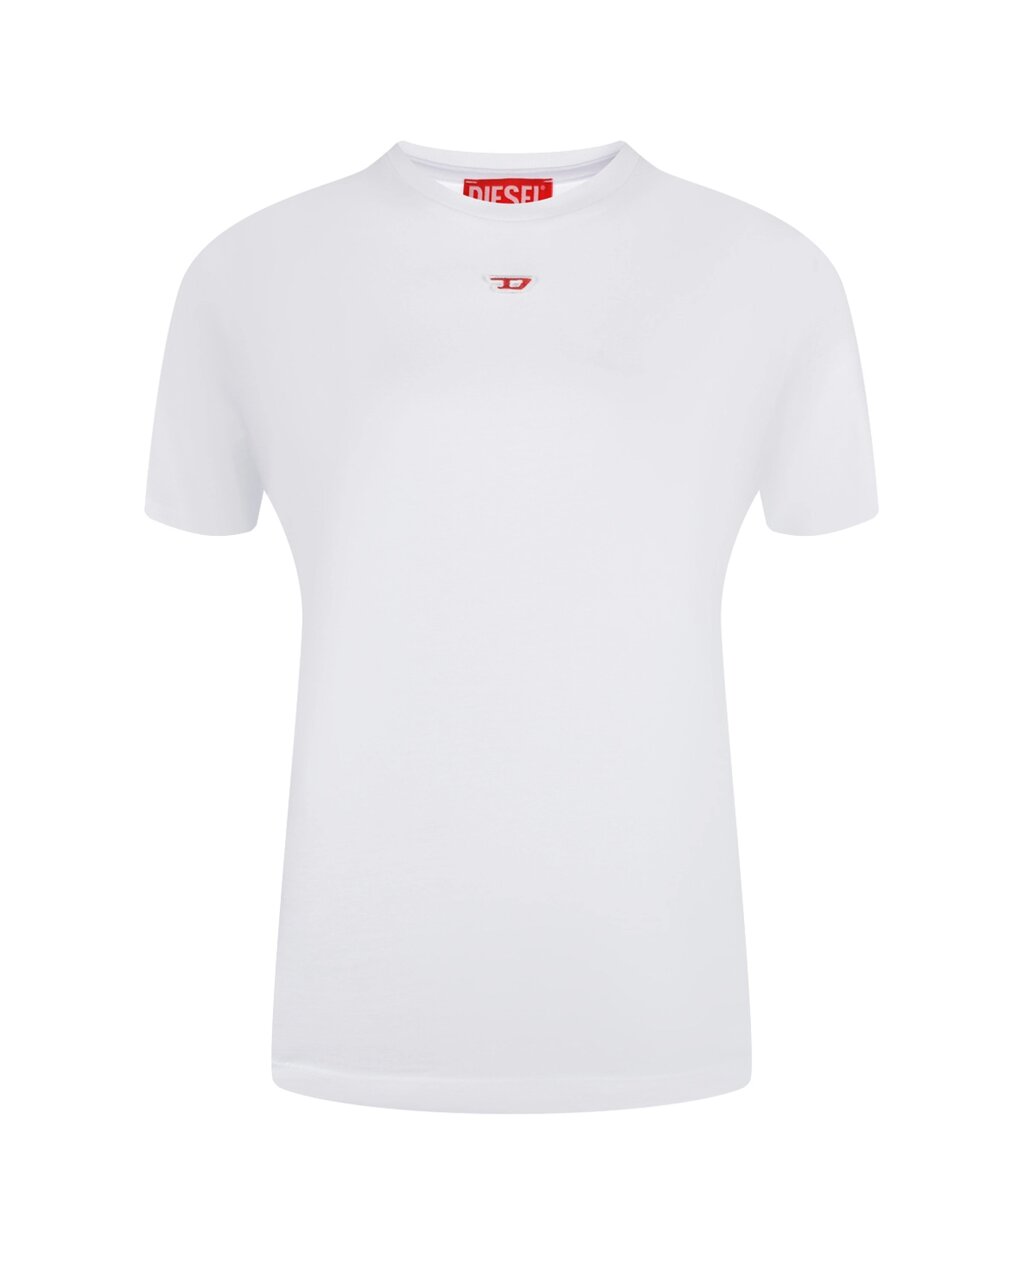 Базовая белая футболка Diesel от компании Admi - фото 1